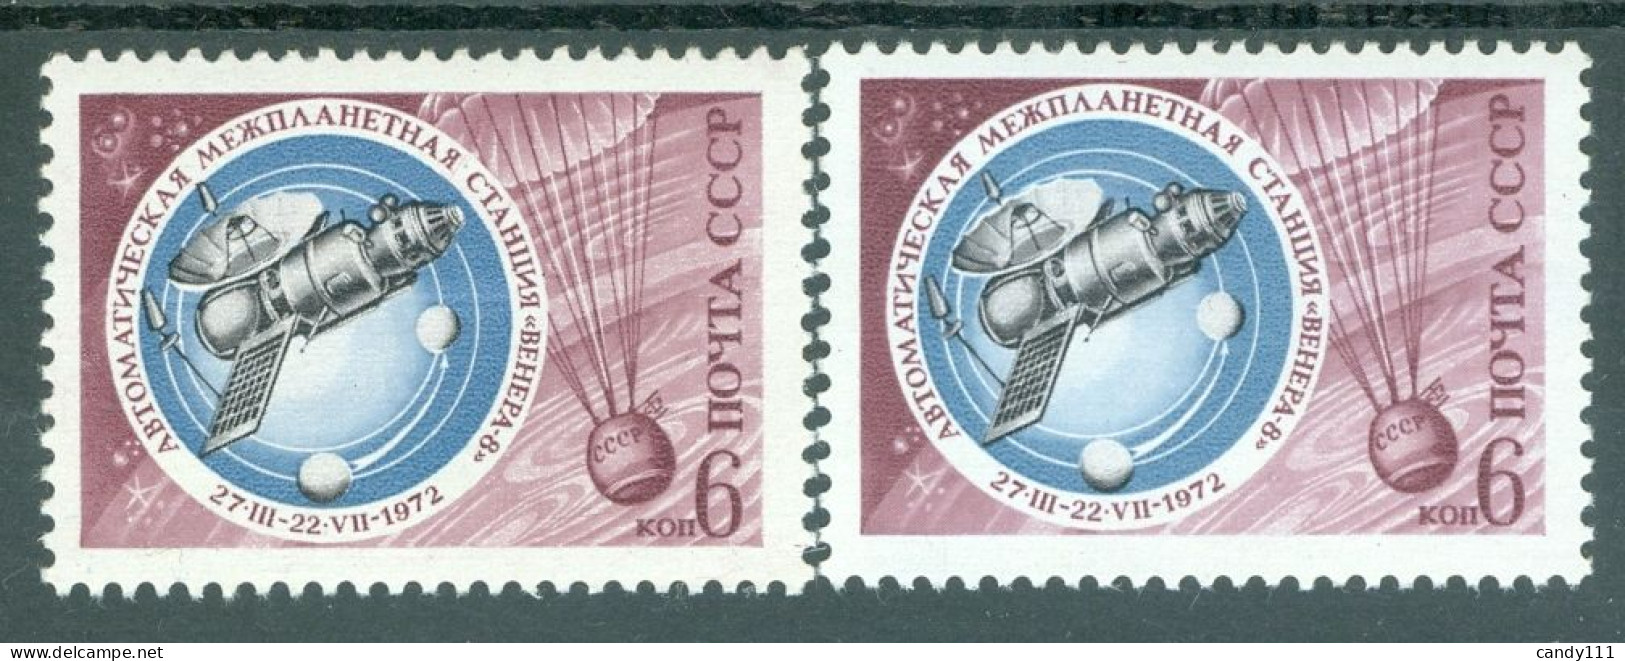 1972 Space,Venus/Venera 8,probe/robotic Spacecraft,Russia,4079,Gum Variety,MNH - Europa